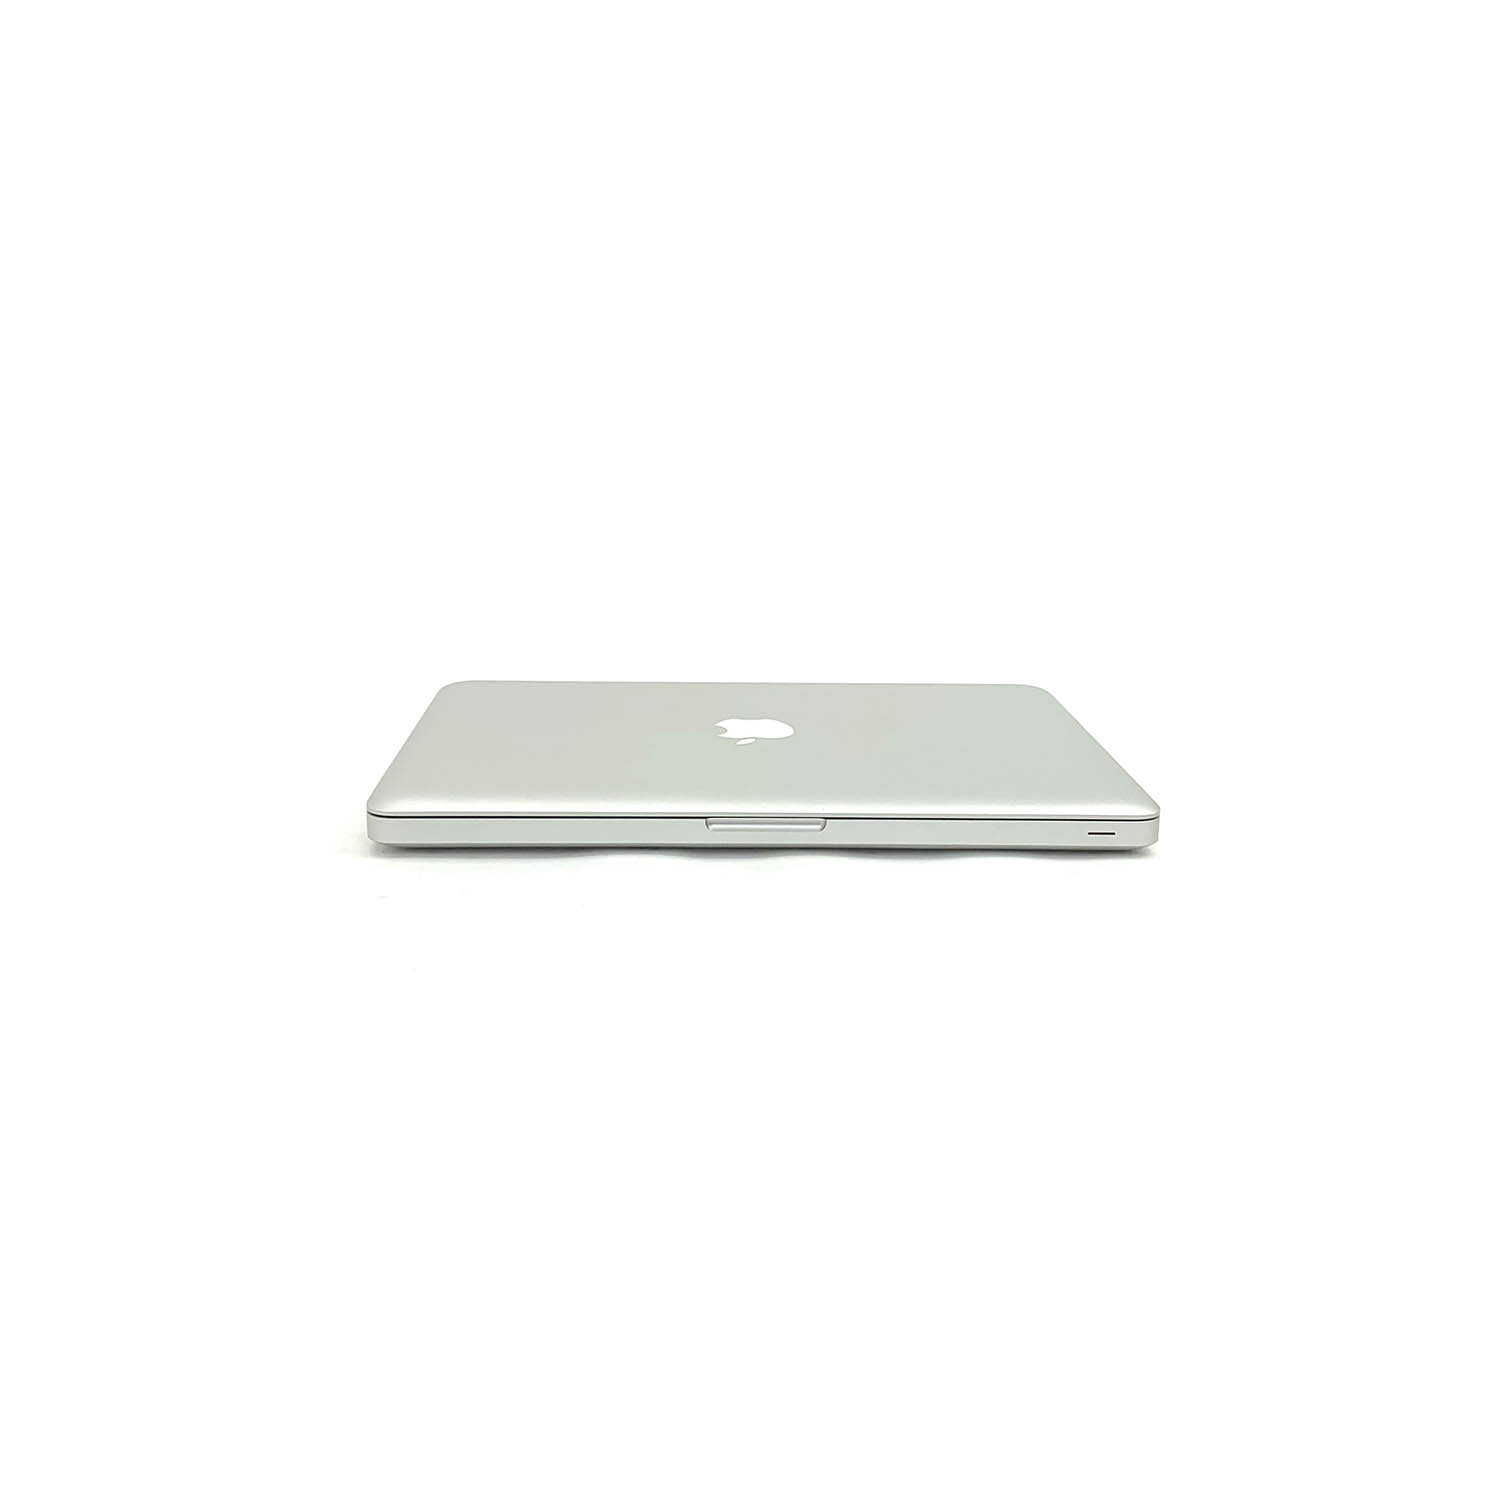 Macbook Pro 13 i7 2.9GHZ 8GB 750GB HD MD102LL/A  Seminovo